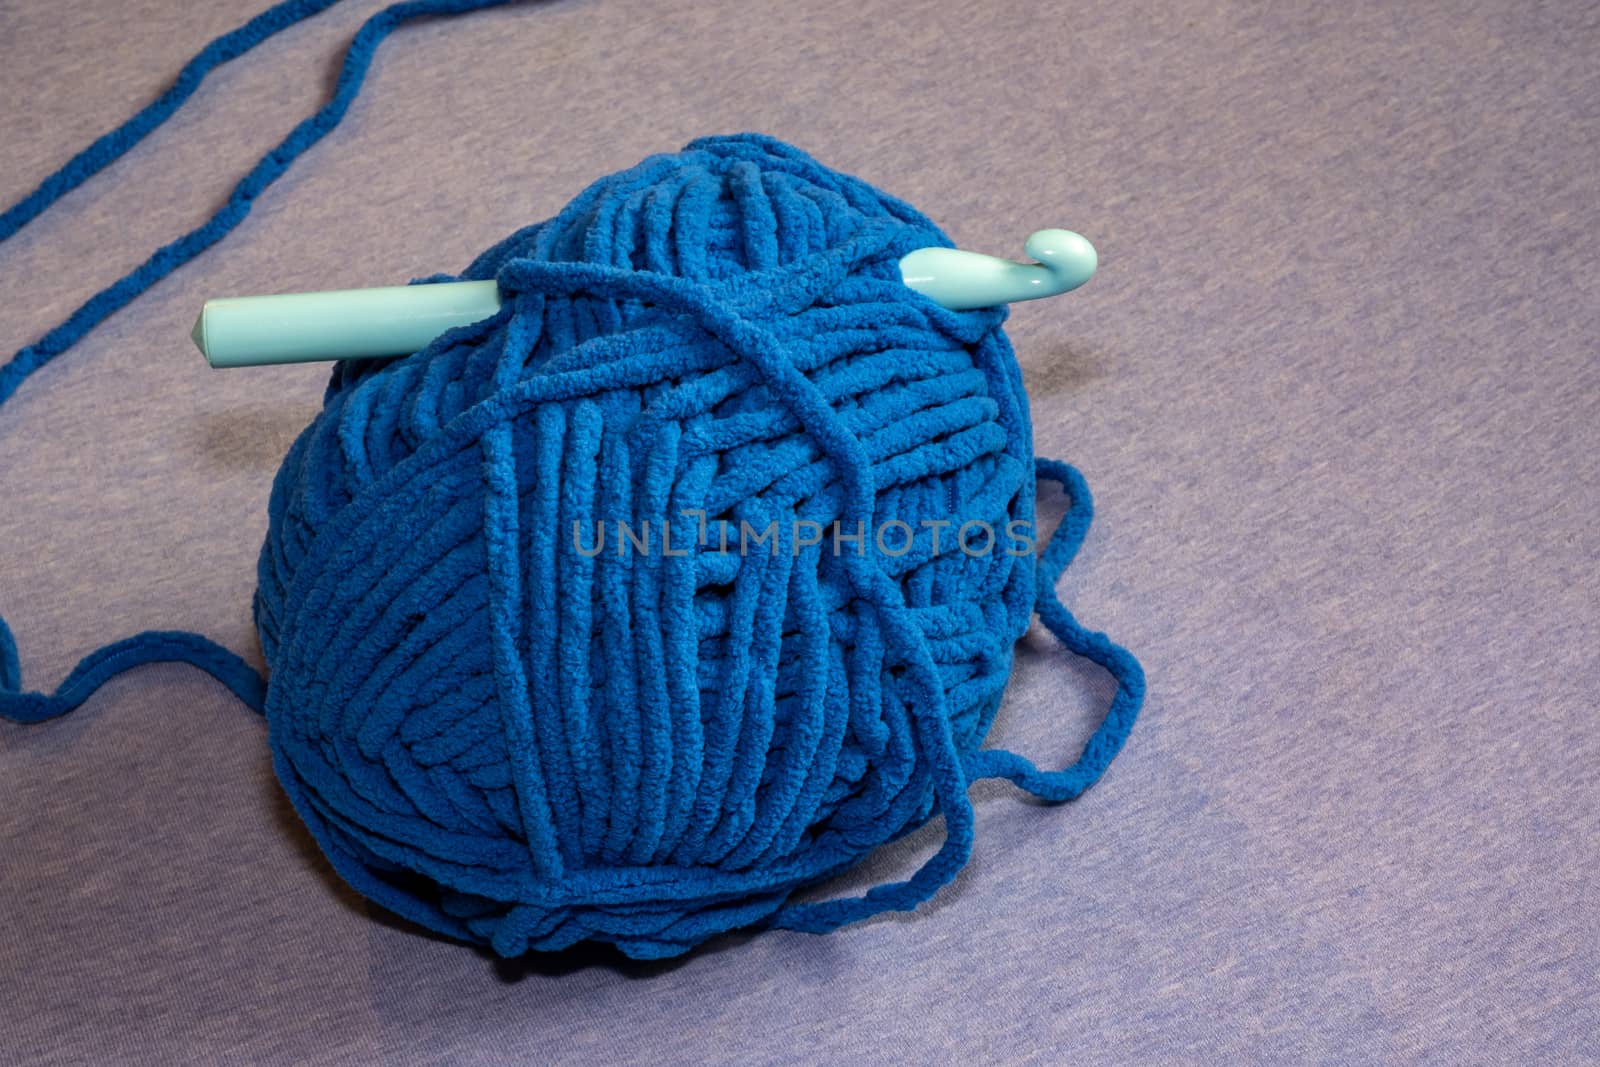 Blue Blanket Yarn with a Crochet Hook by colintemple